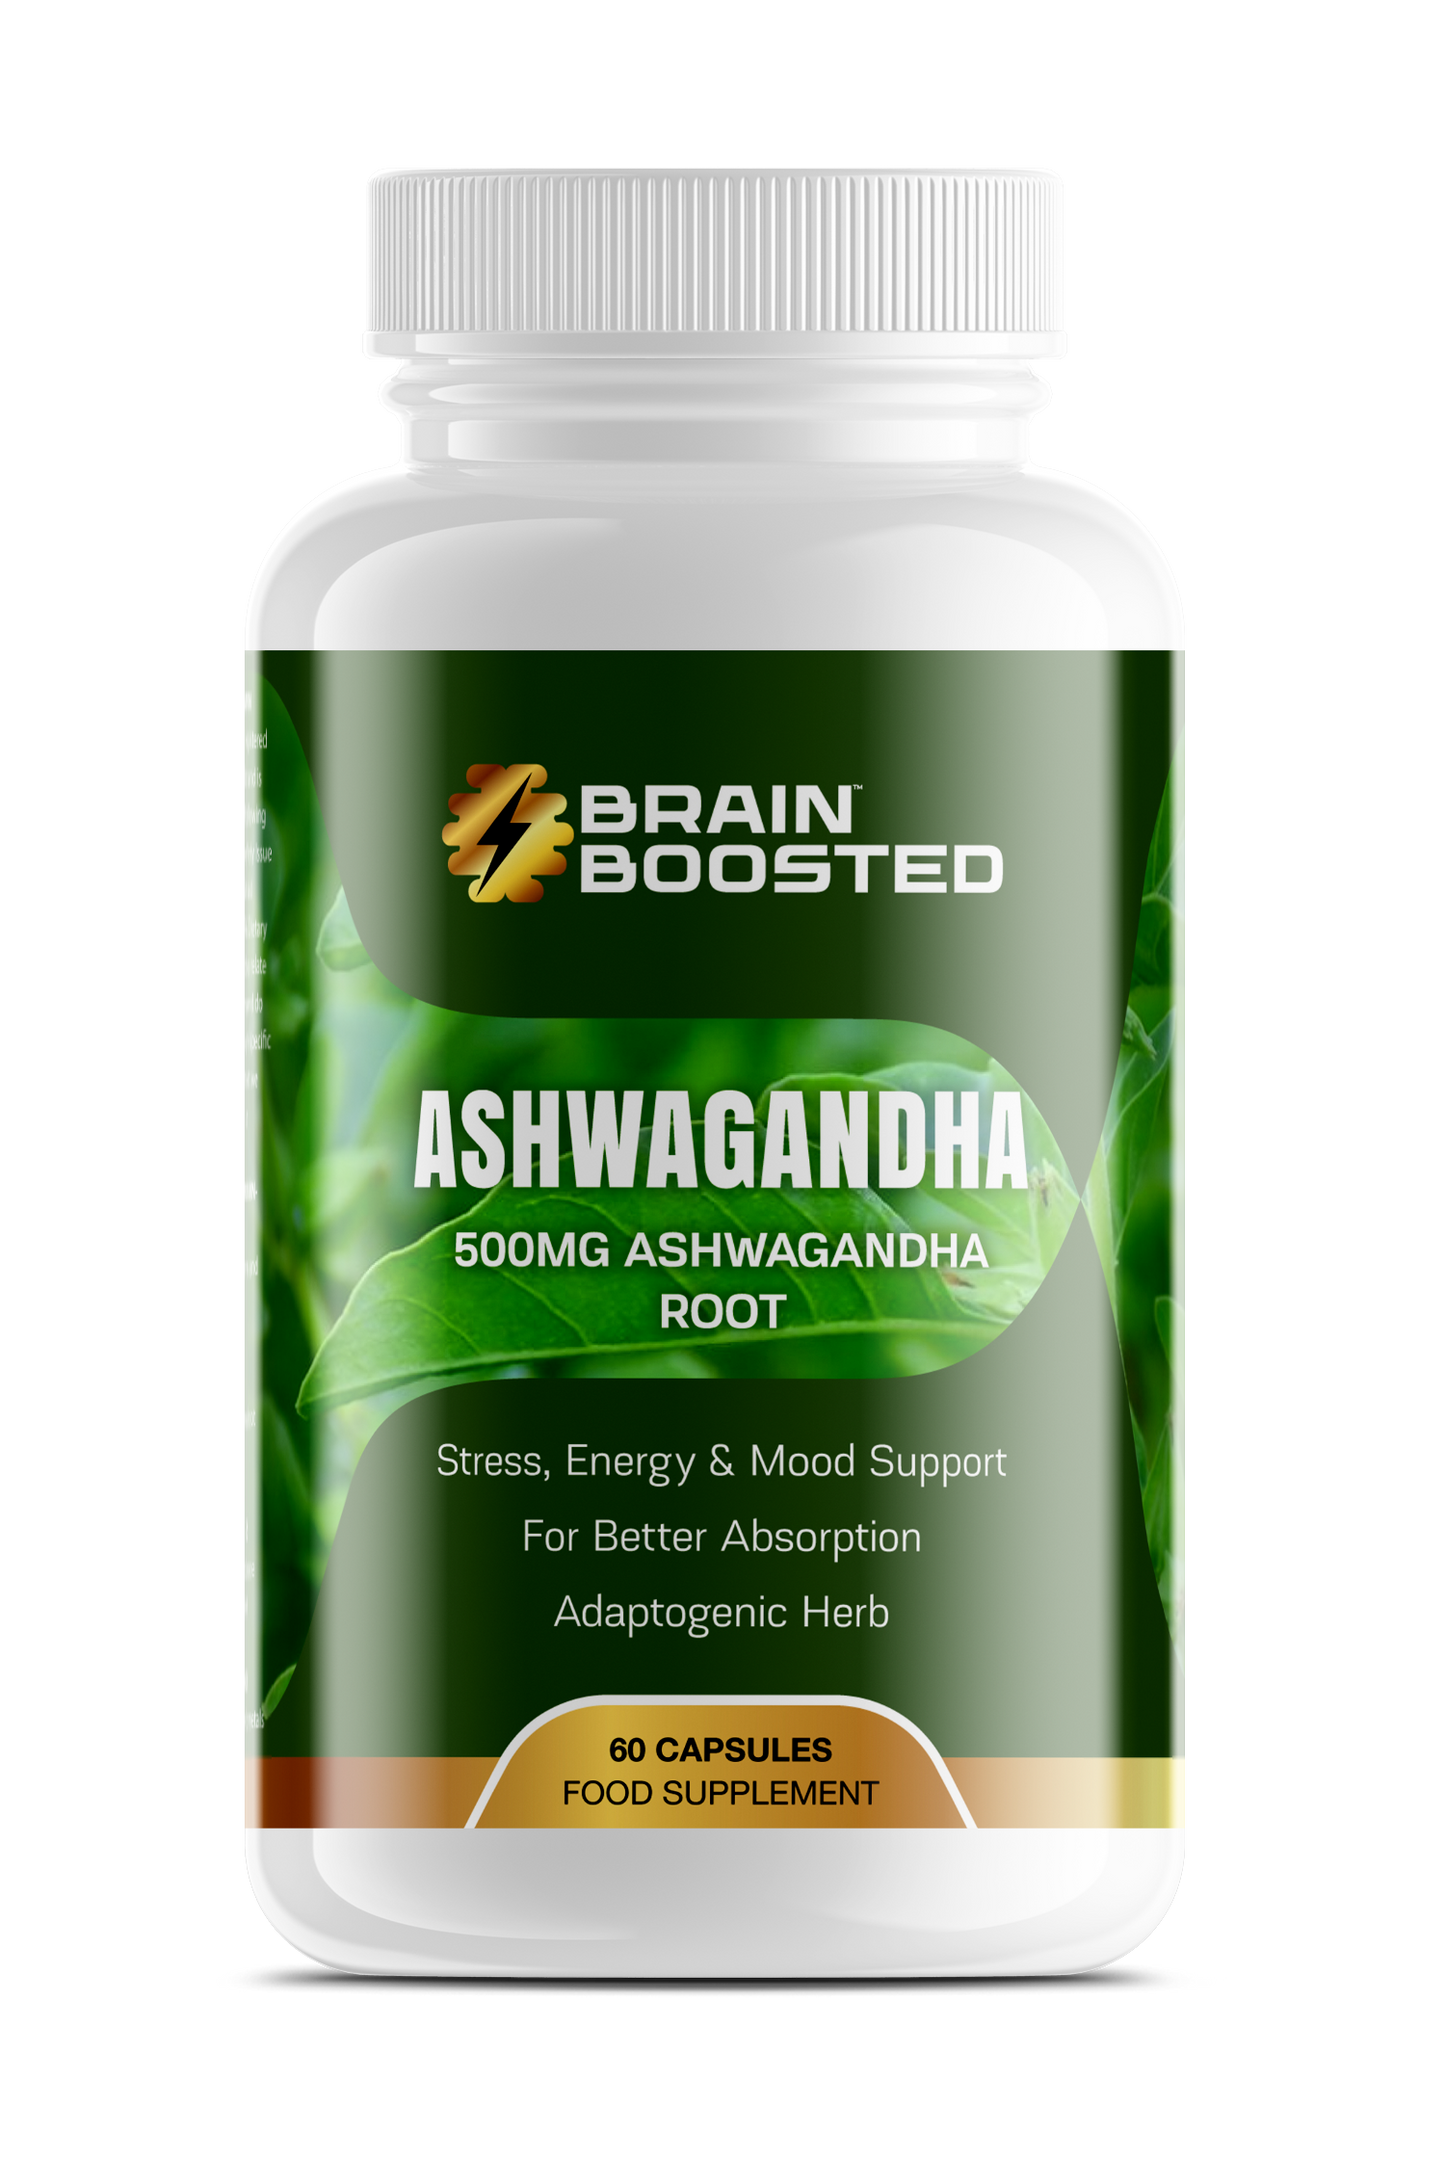 Ashwagandha Root Extract 500MG Supplement - 60 Capsules - Natural Adaptogenic Herb for Stress, Mood, Energy - Vegan, UK Made